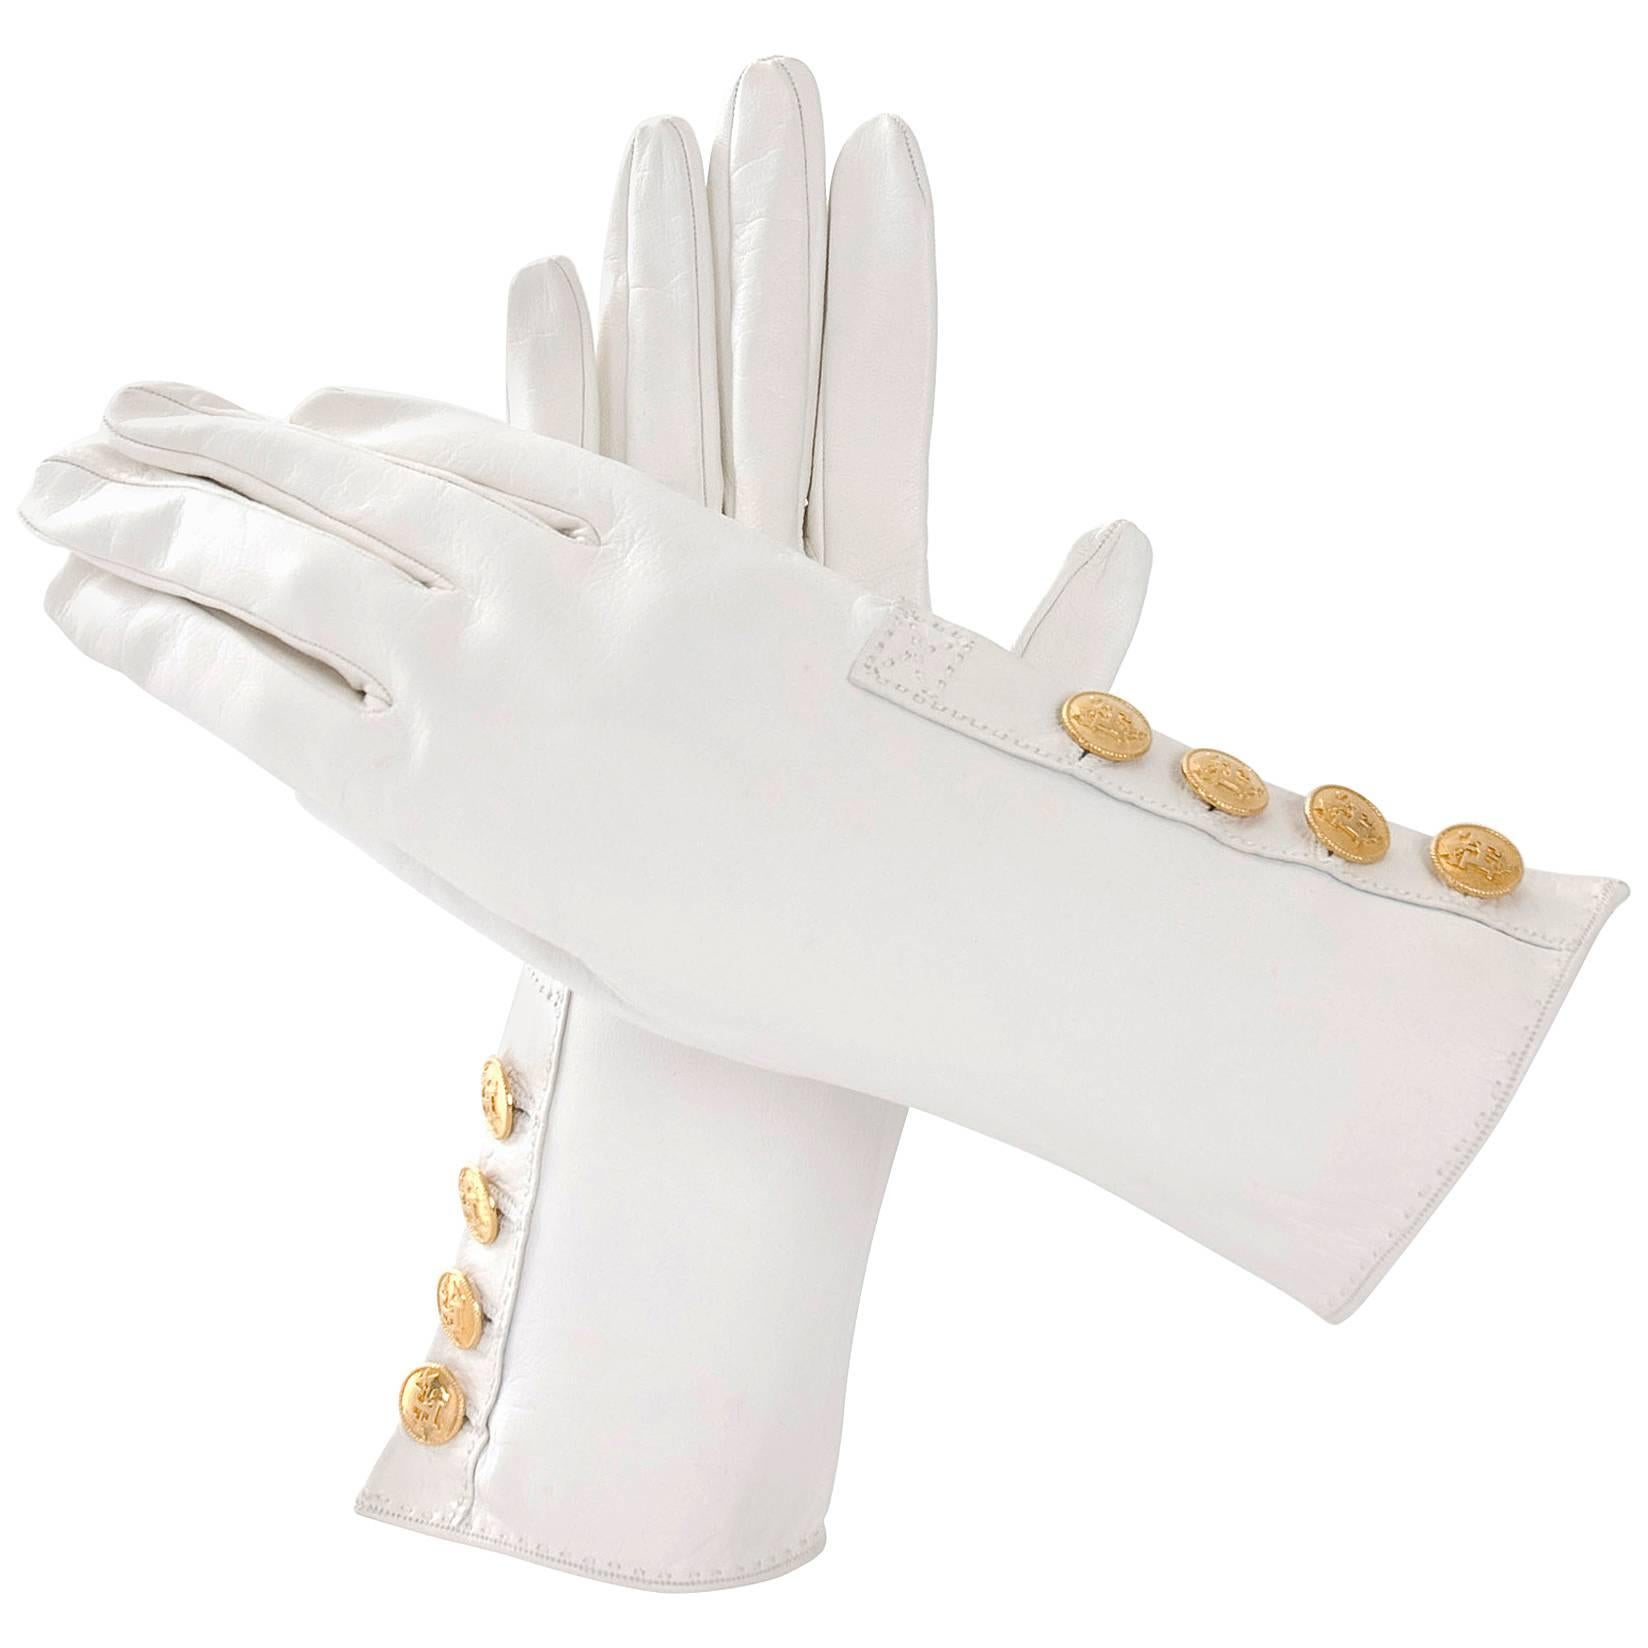 90's Hermes Leather Gloves - like new.